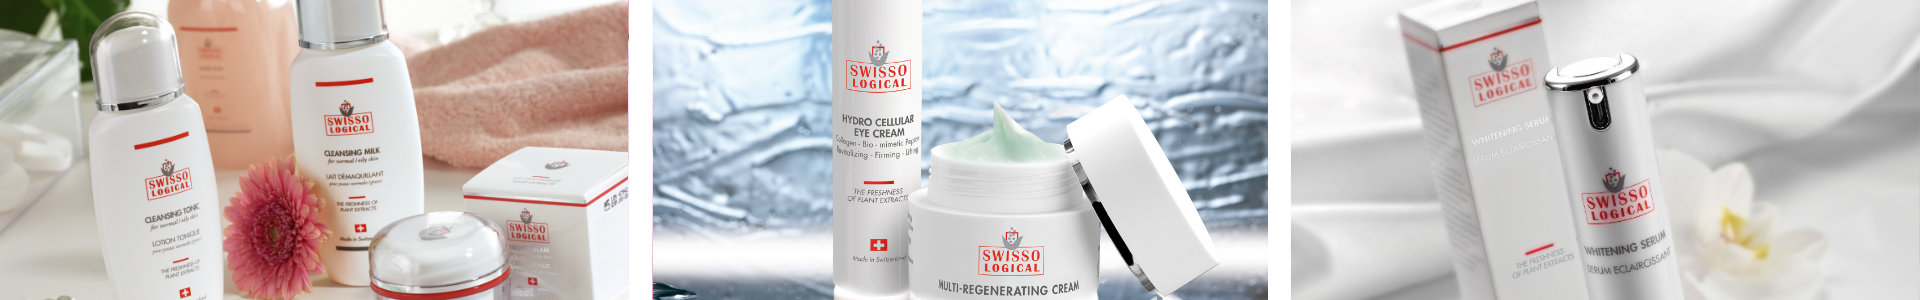 Swisso Logical skincare line